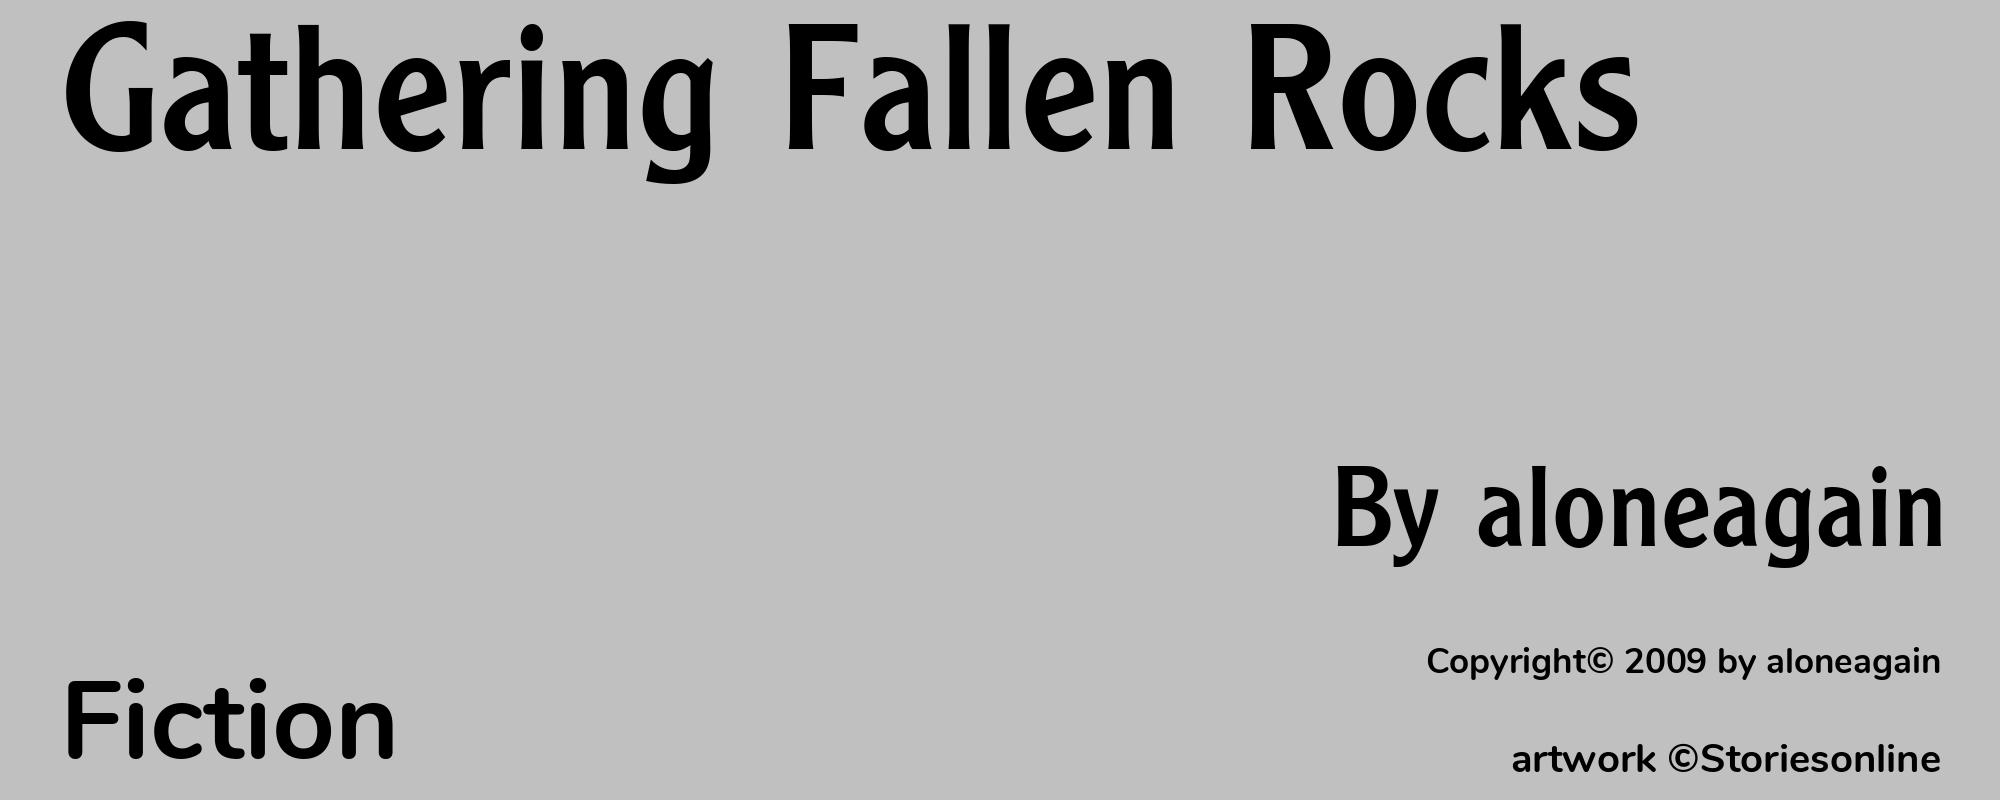 Gathering Fallen Rocks - Cover